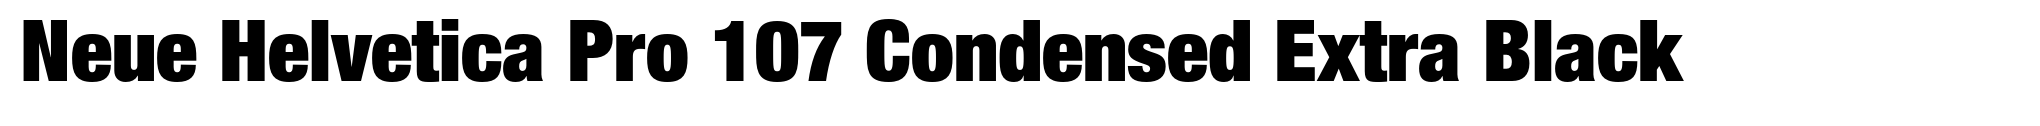 Neue Helvetica Pro 107 Condensed Extra Black image